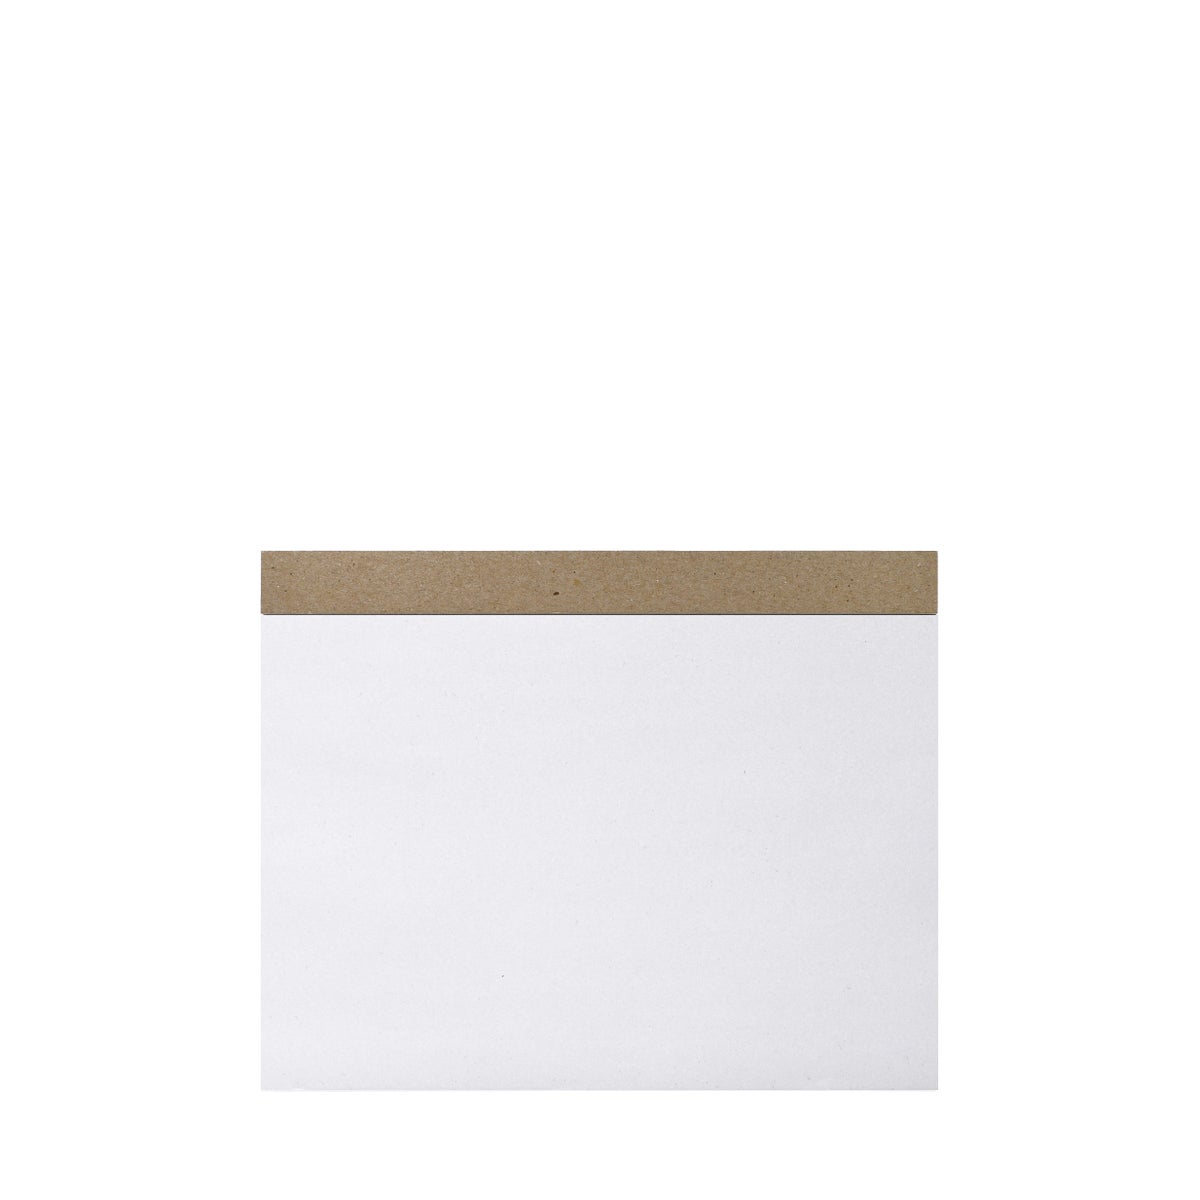 Ito Bindery Drawing Pad A6 - Small / White